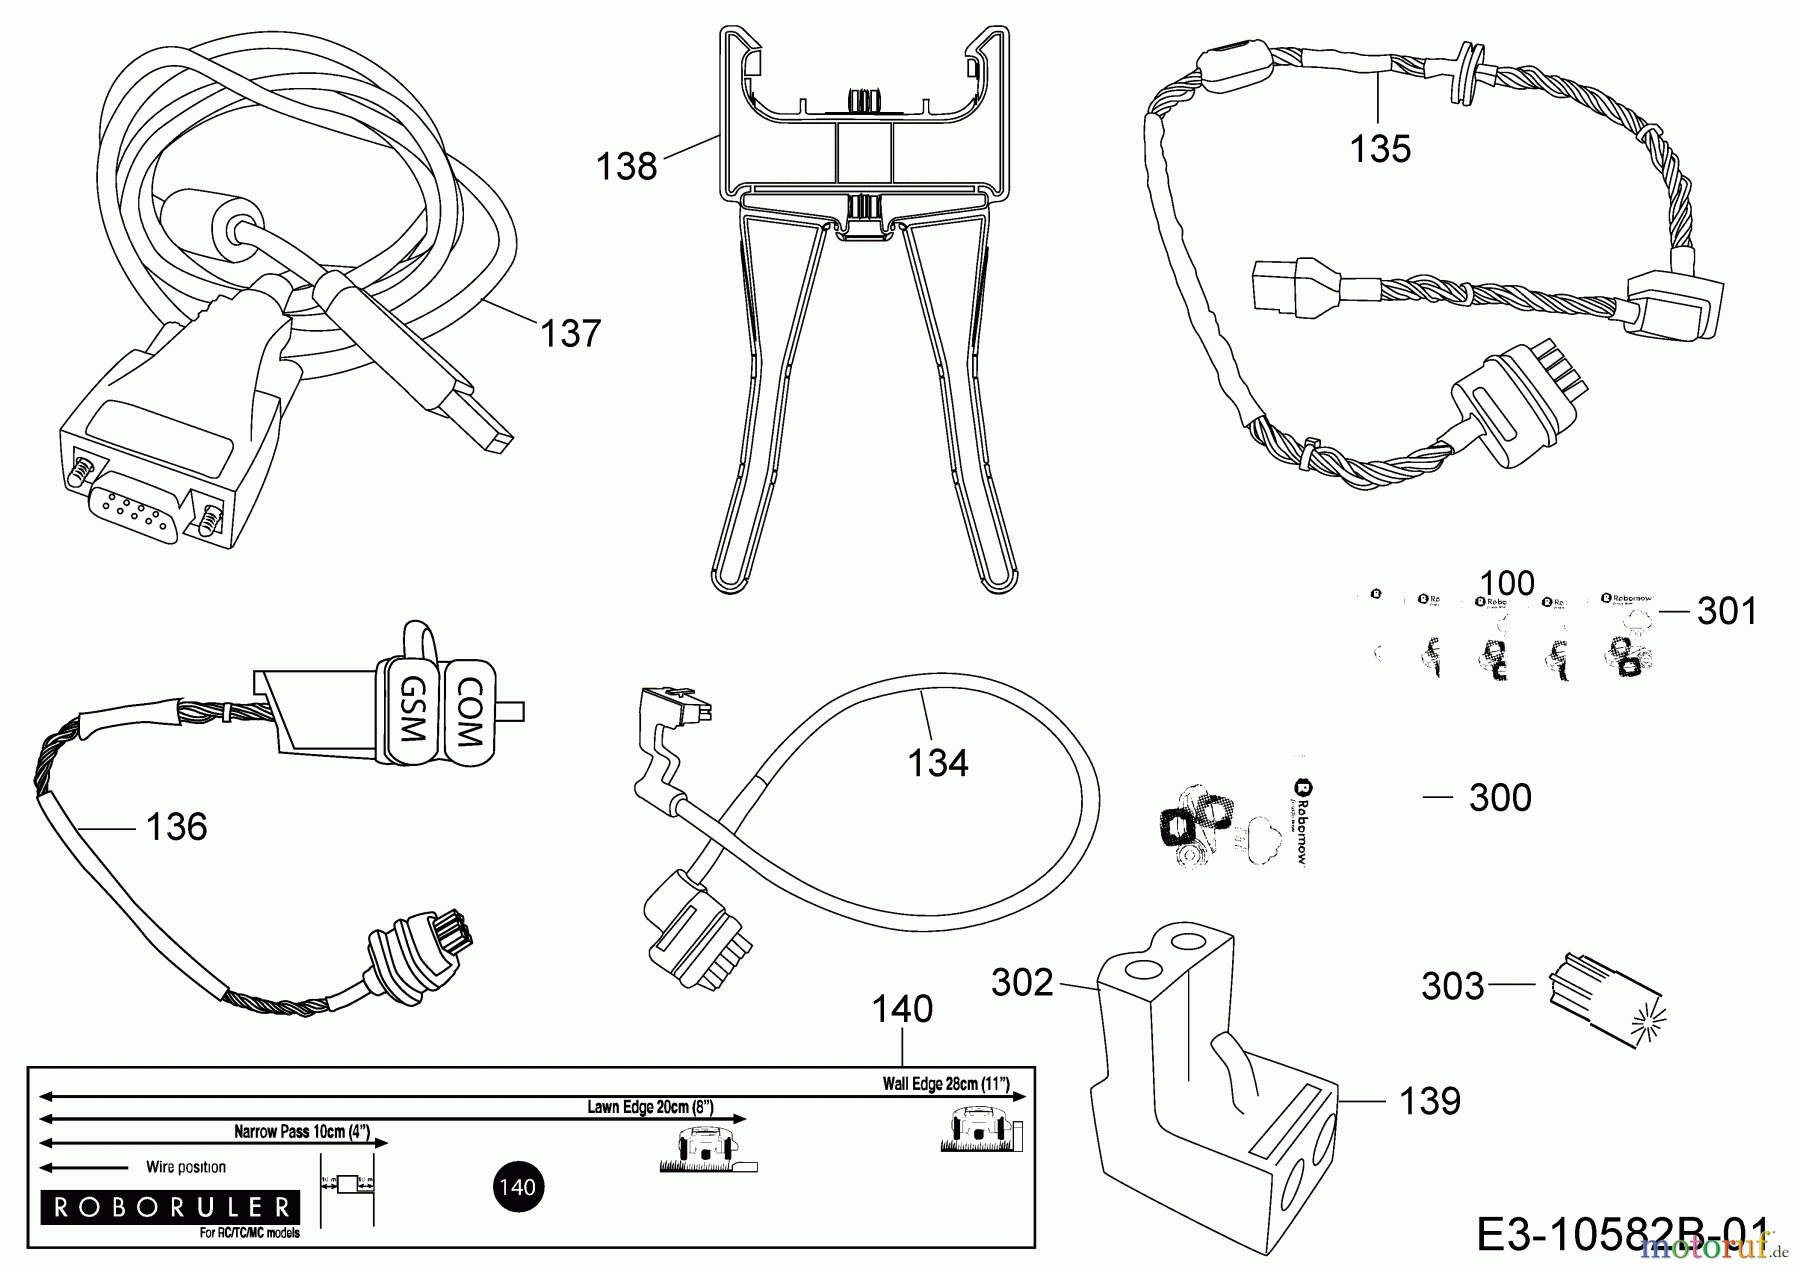  Robomow Mähroboter RC312 (White) PRD7012BW  (2016) Kabel, Kabelanschluß, Regensensor, Werkzeug